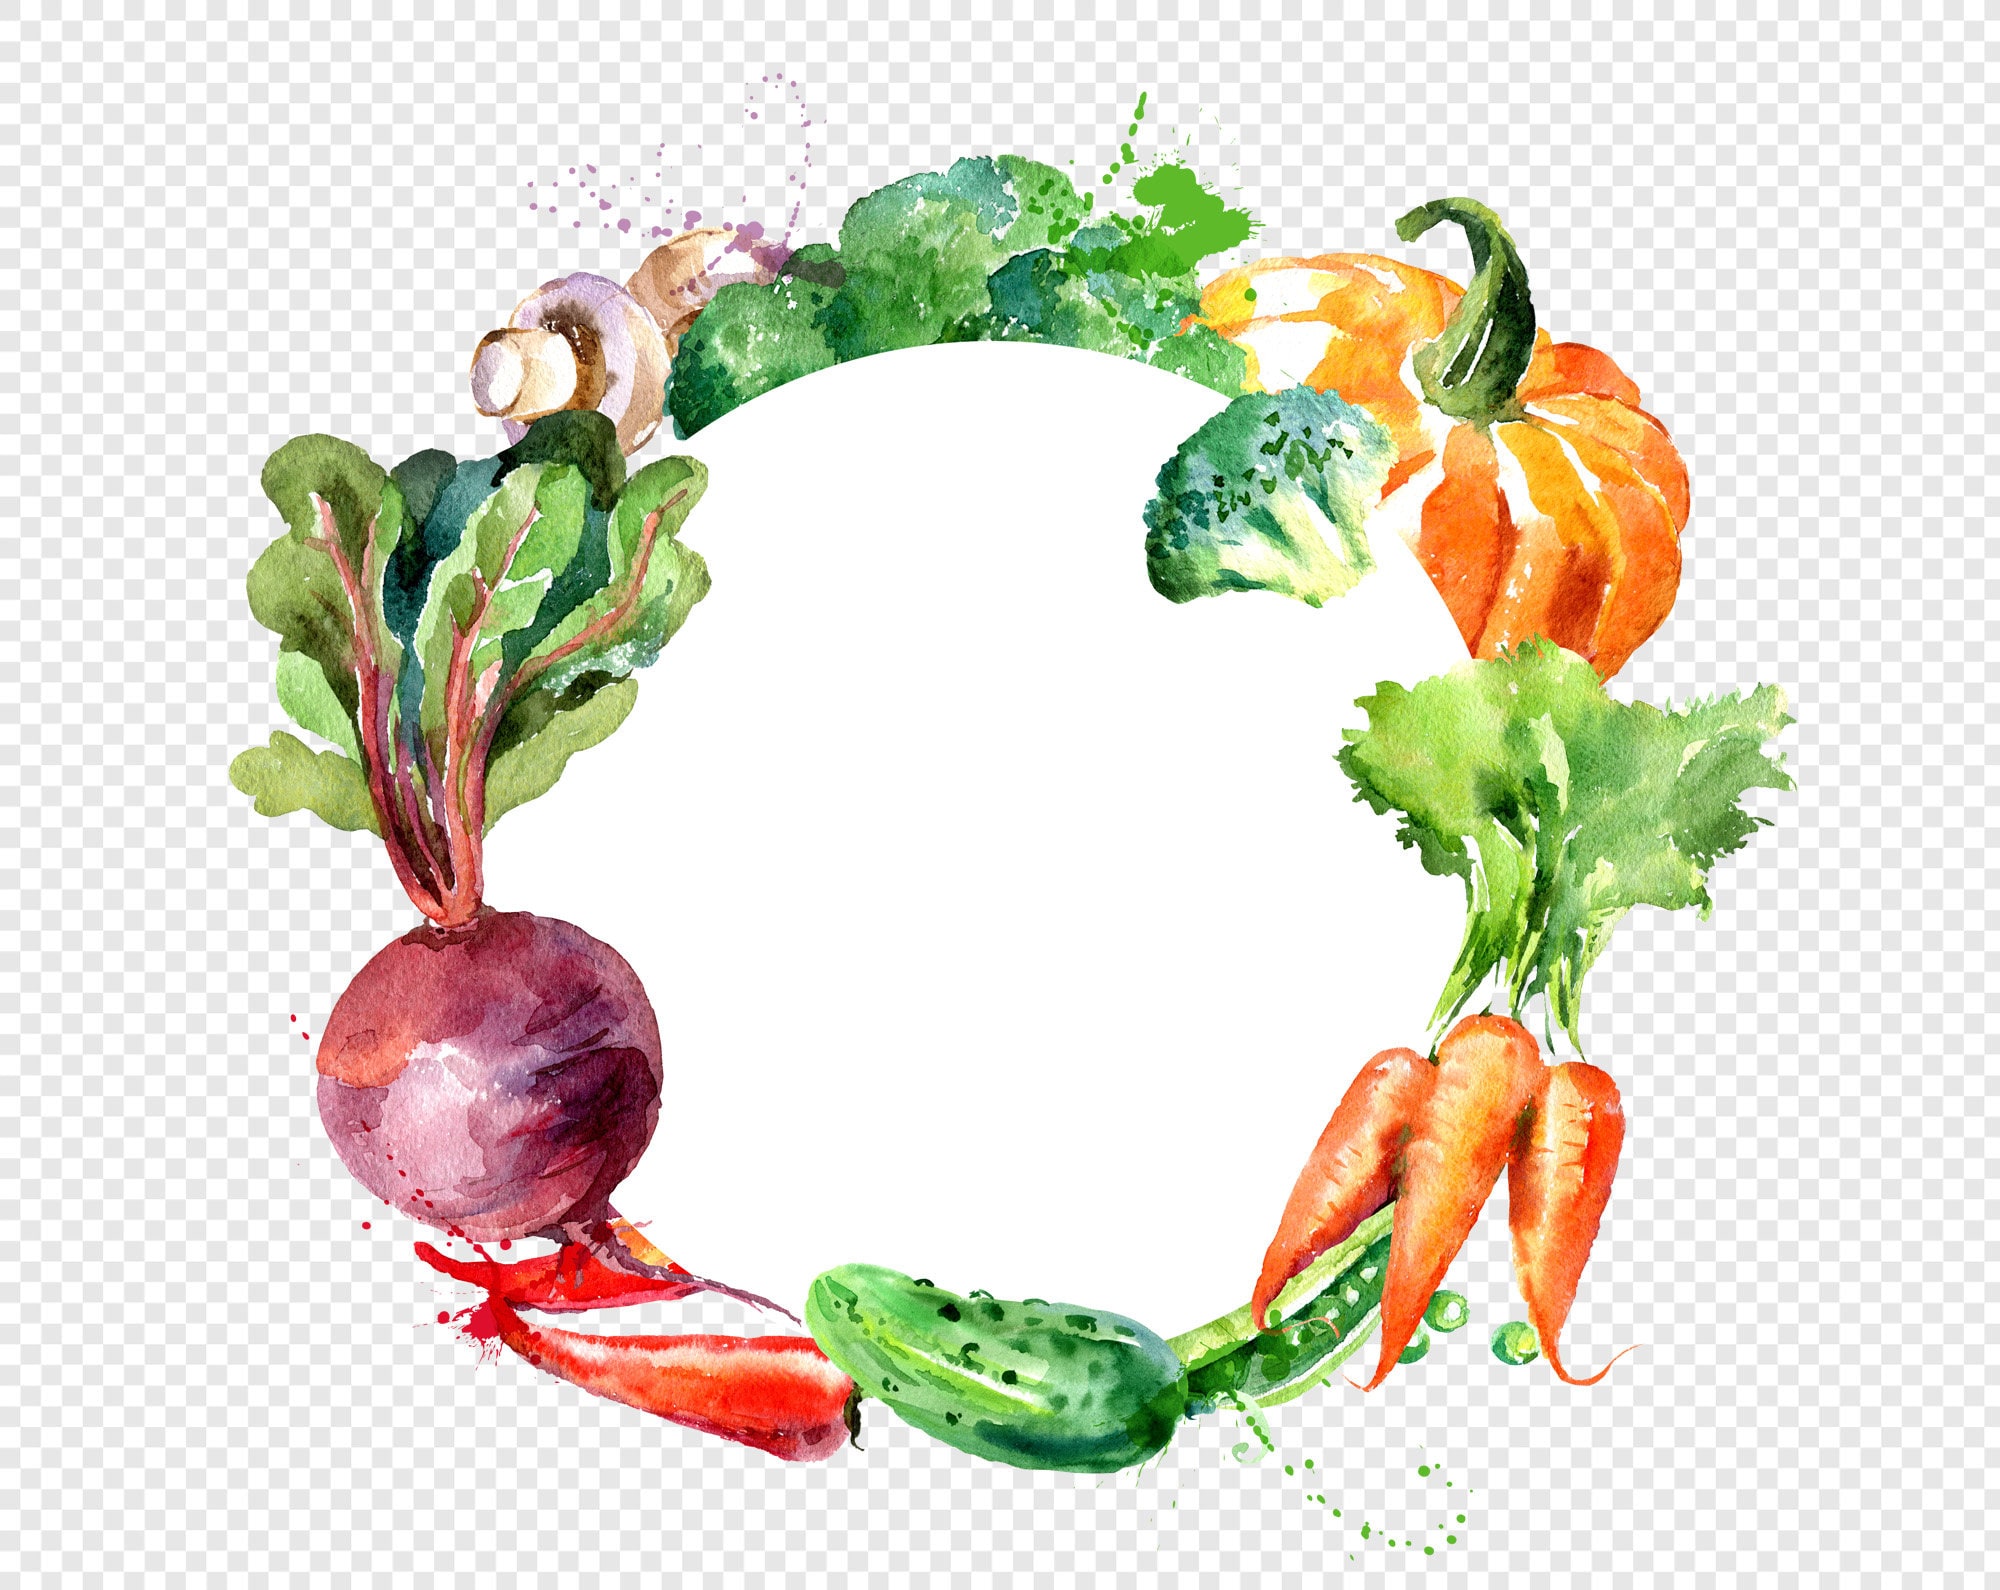 Watercolor Vegetables Frame Png Clip Art Vegan Food Clipart Etsy